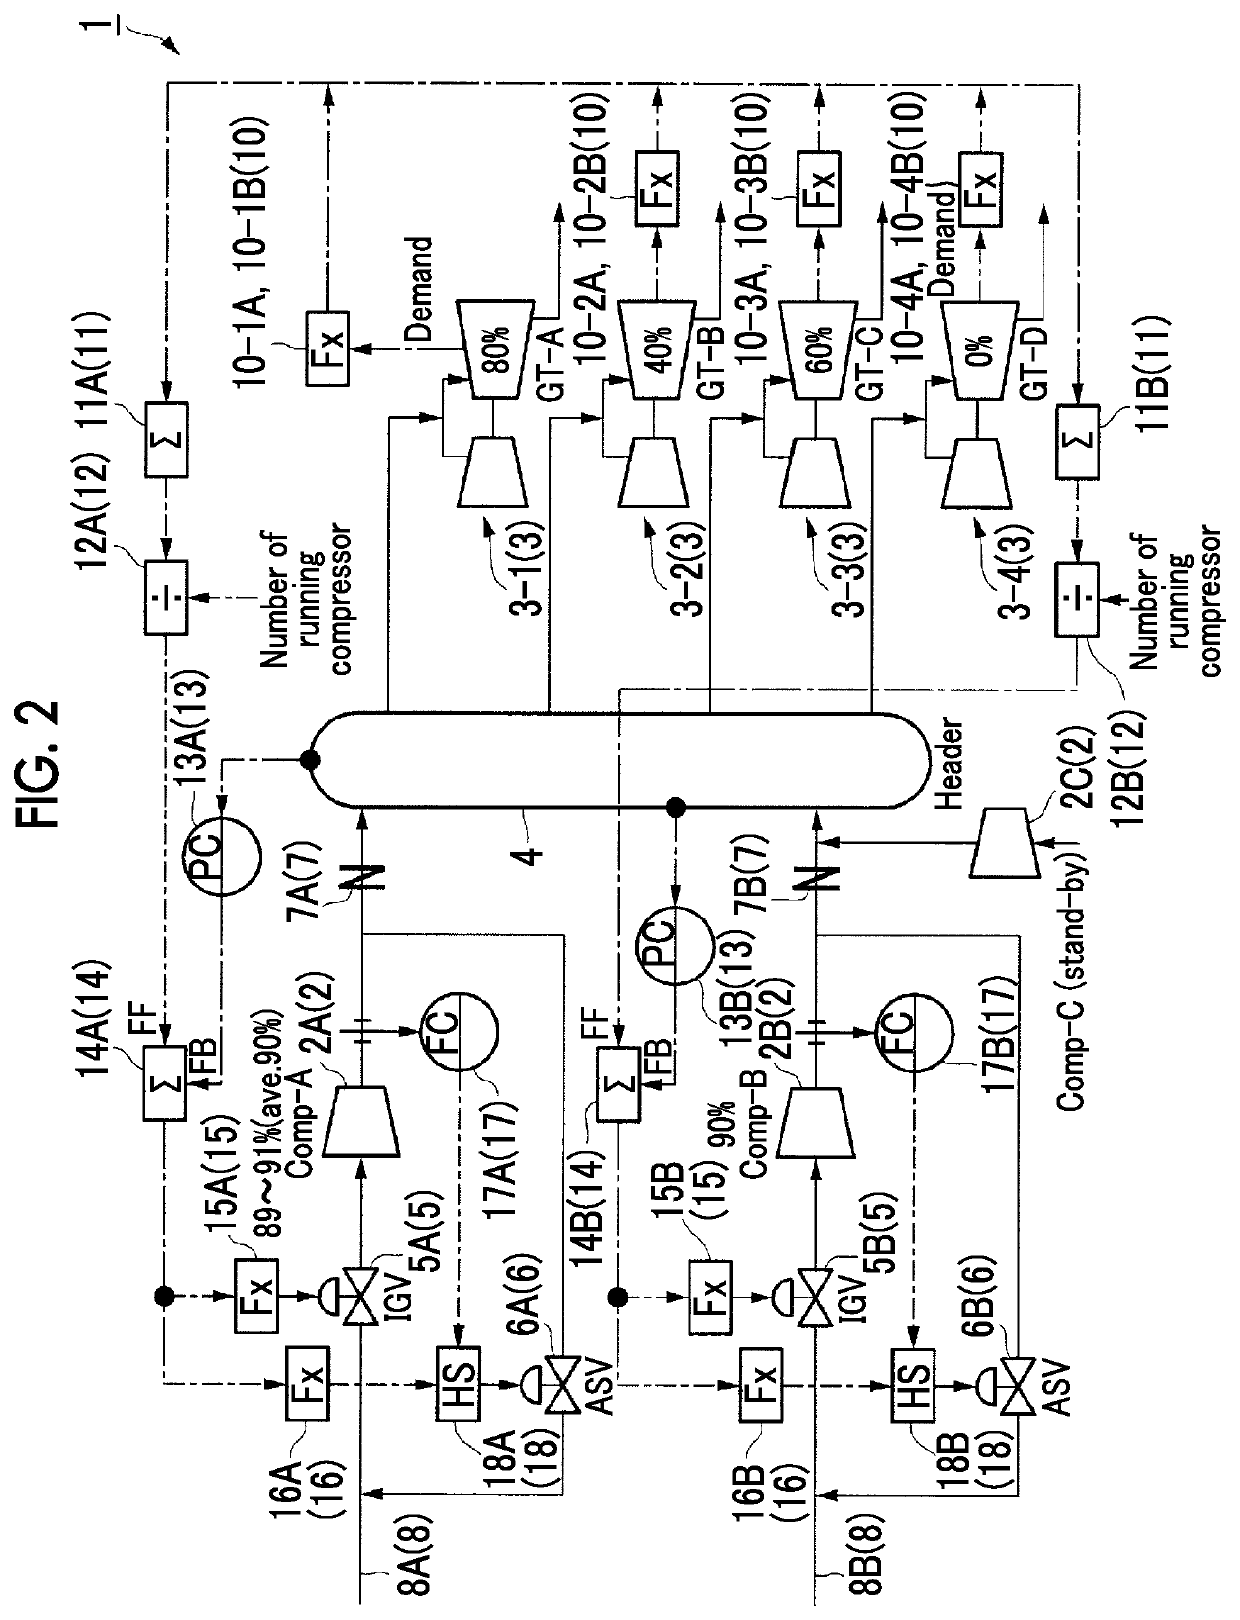 Compressor control device, compressor control system, and compressor control method